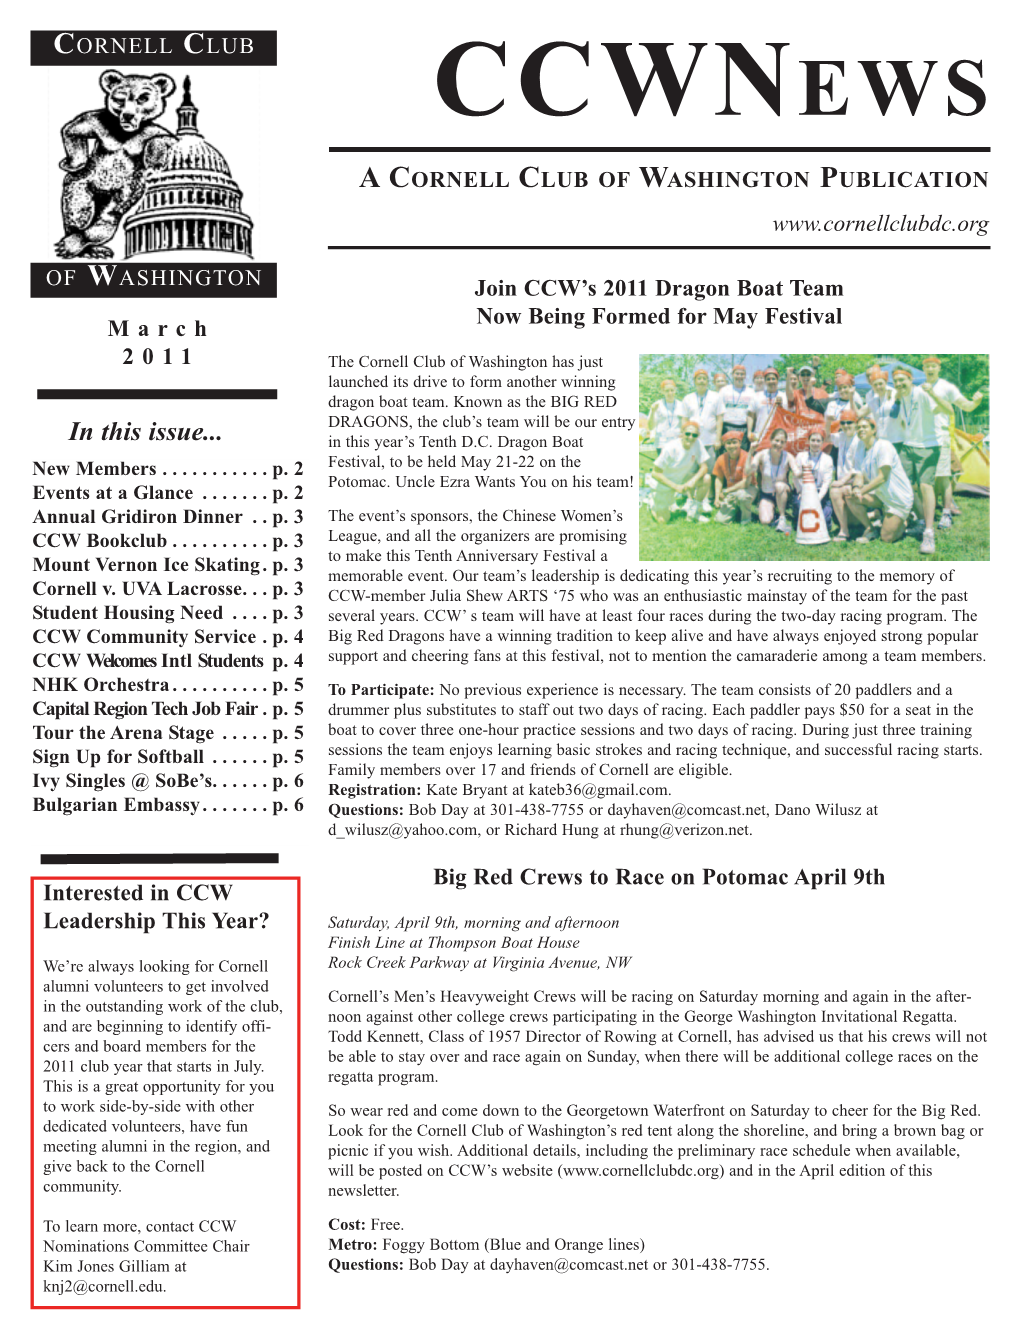 CCW News April 2007.Qxd